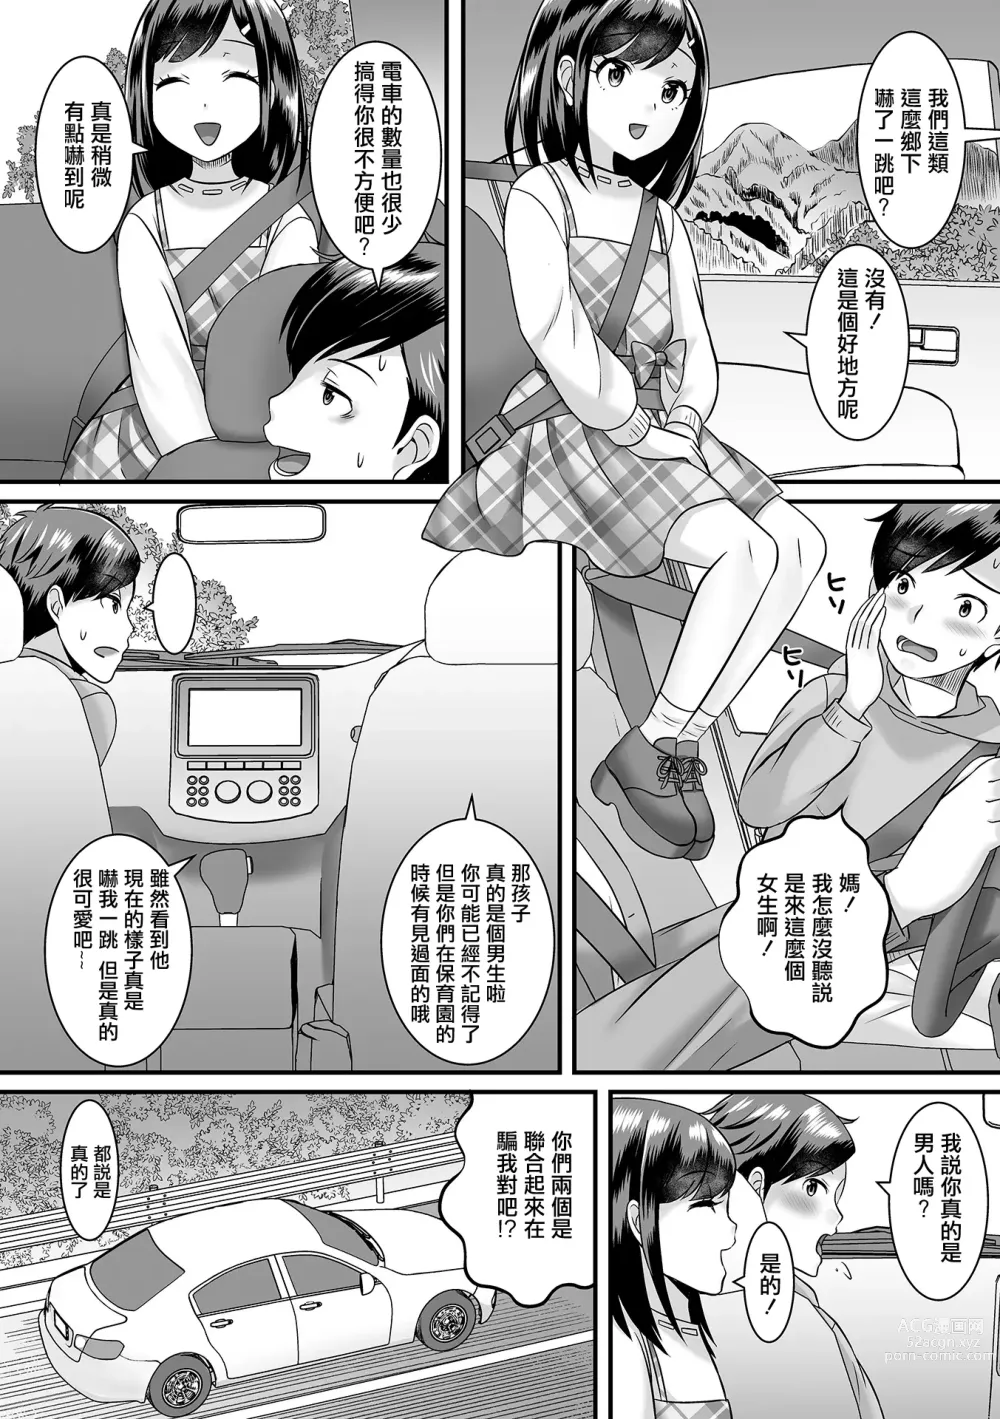 Page 2 of manga 這種孩子來我家了該怎麼辦!?